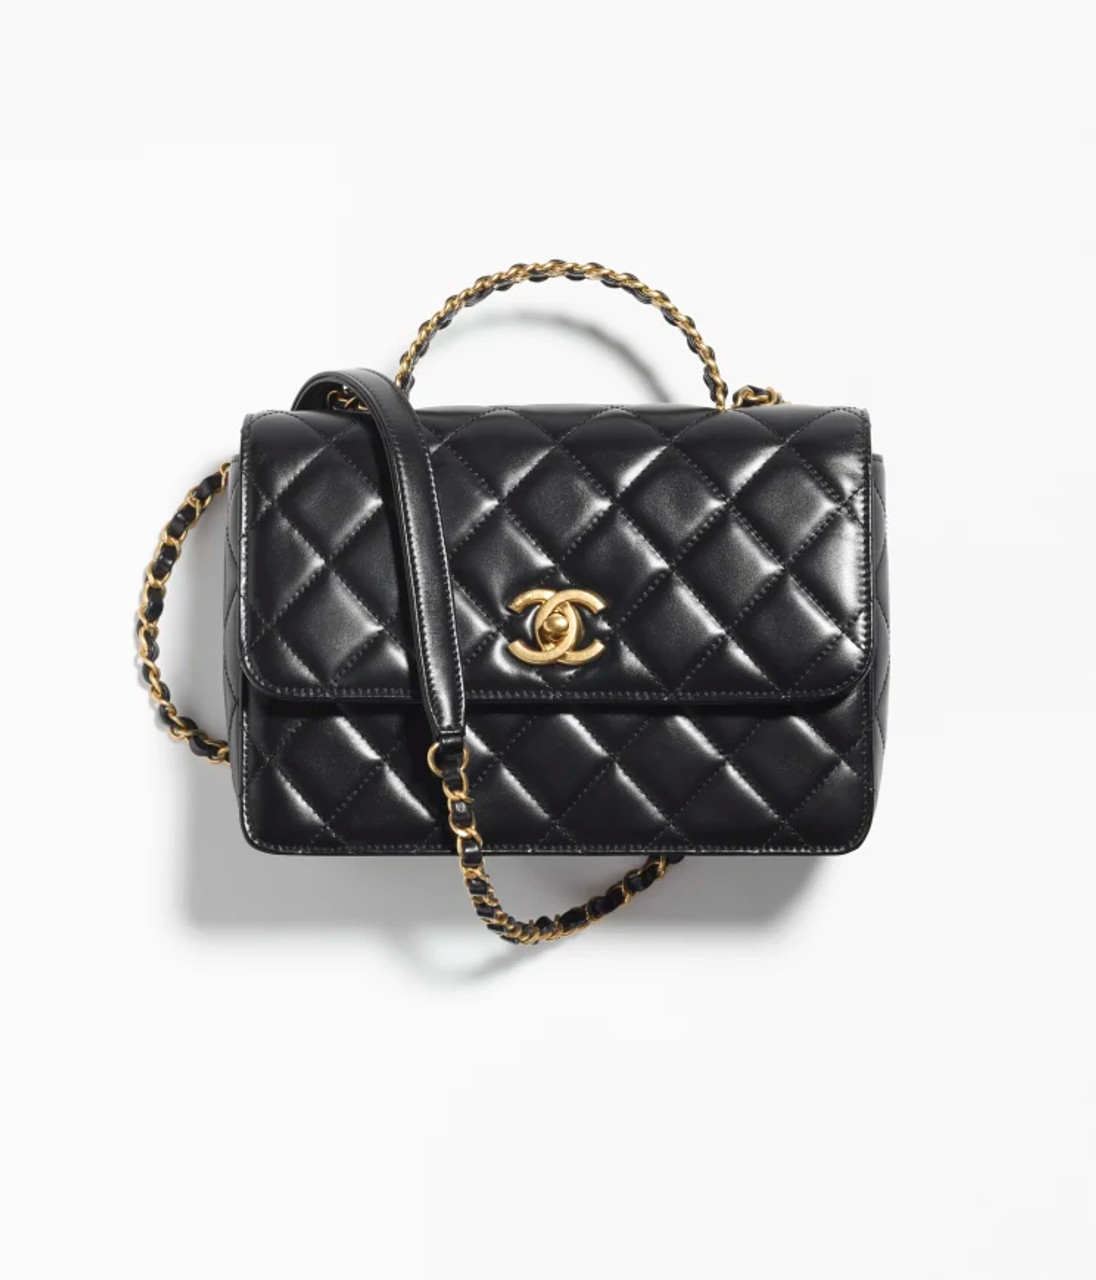 How to Buy a Discounted Chanel Handbag on eBay - Fashion Jackson